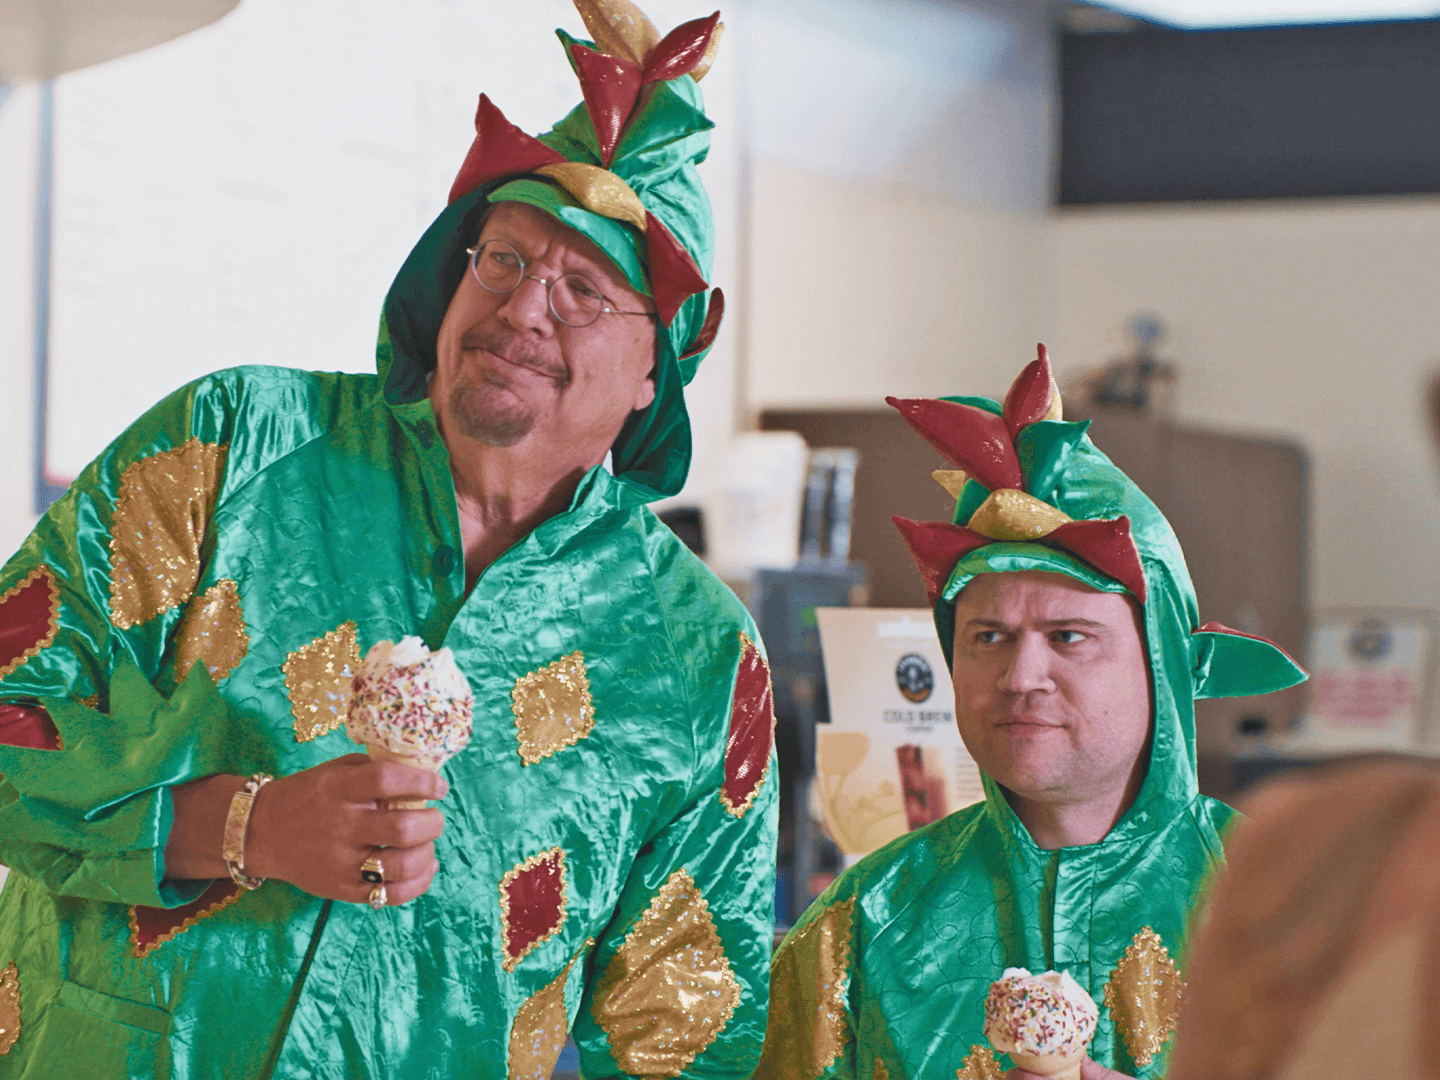 Penn Jillette & Piff both in dinosaur costumes holding ice cream cones